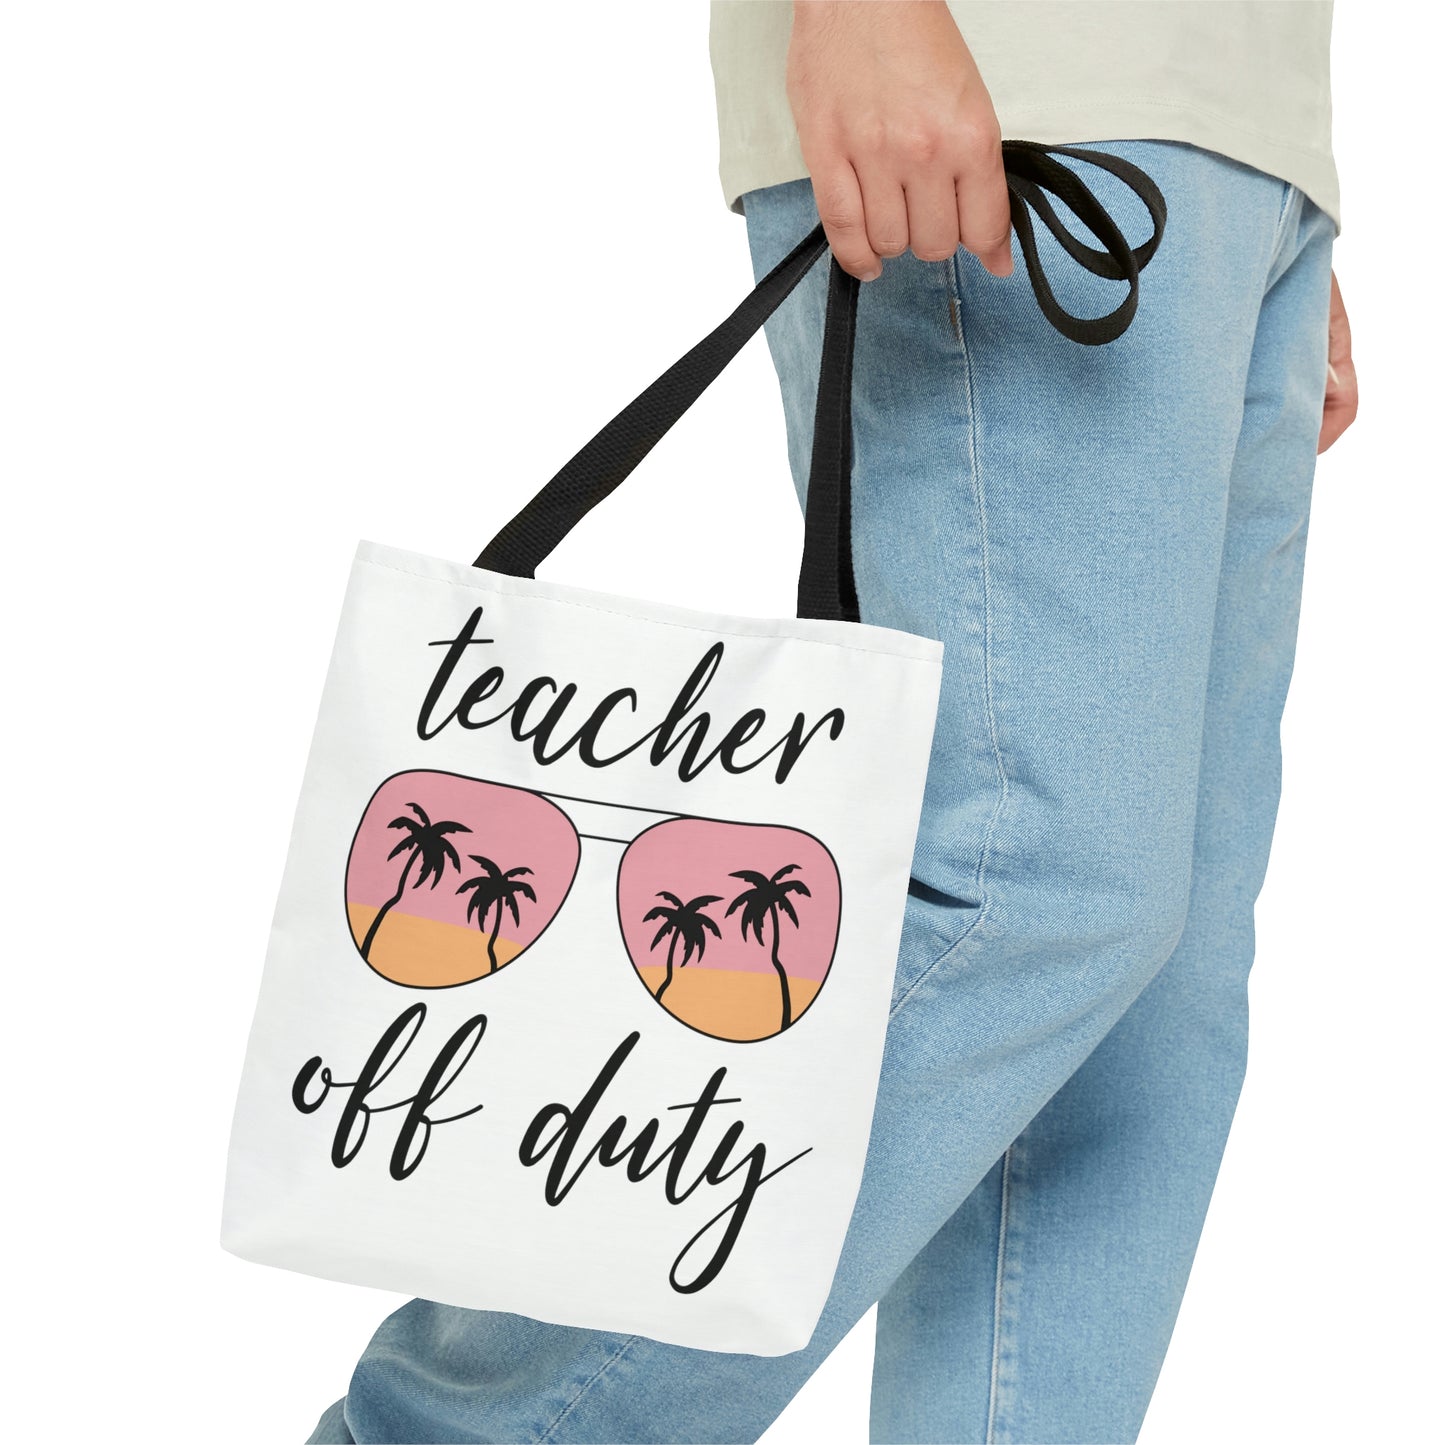 Teacher Off Duty Tote Bag